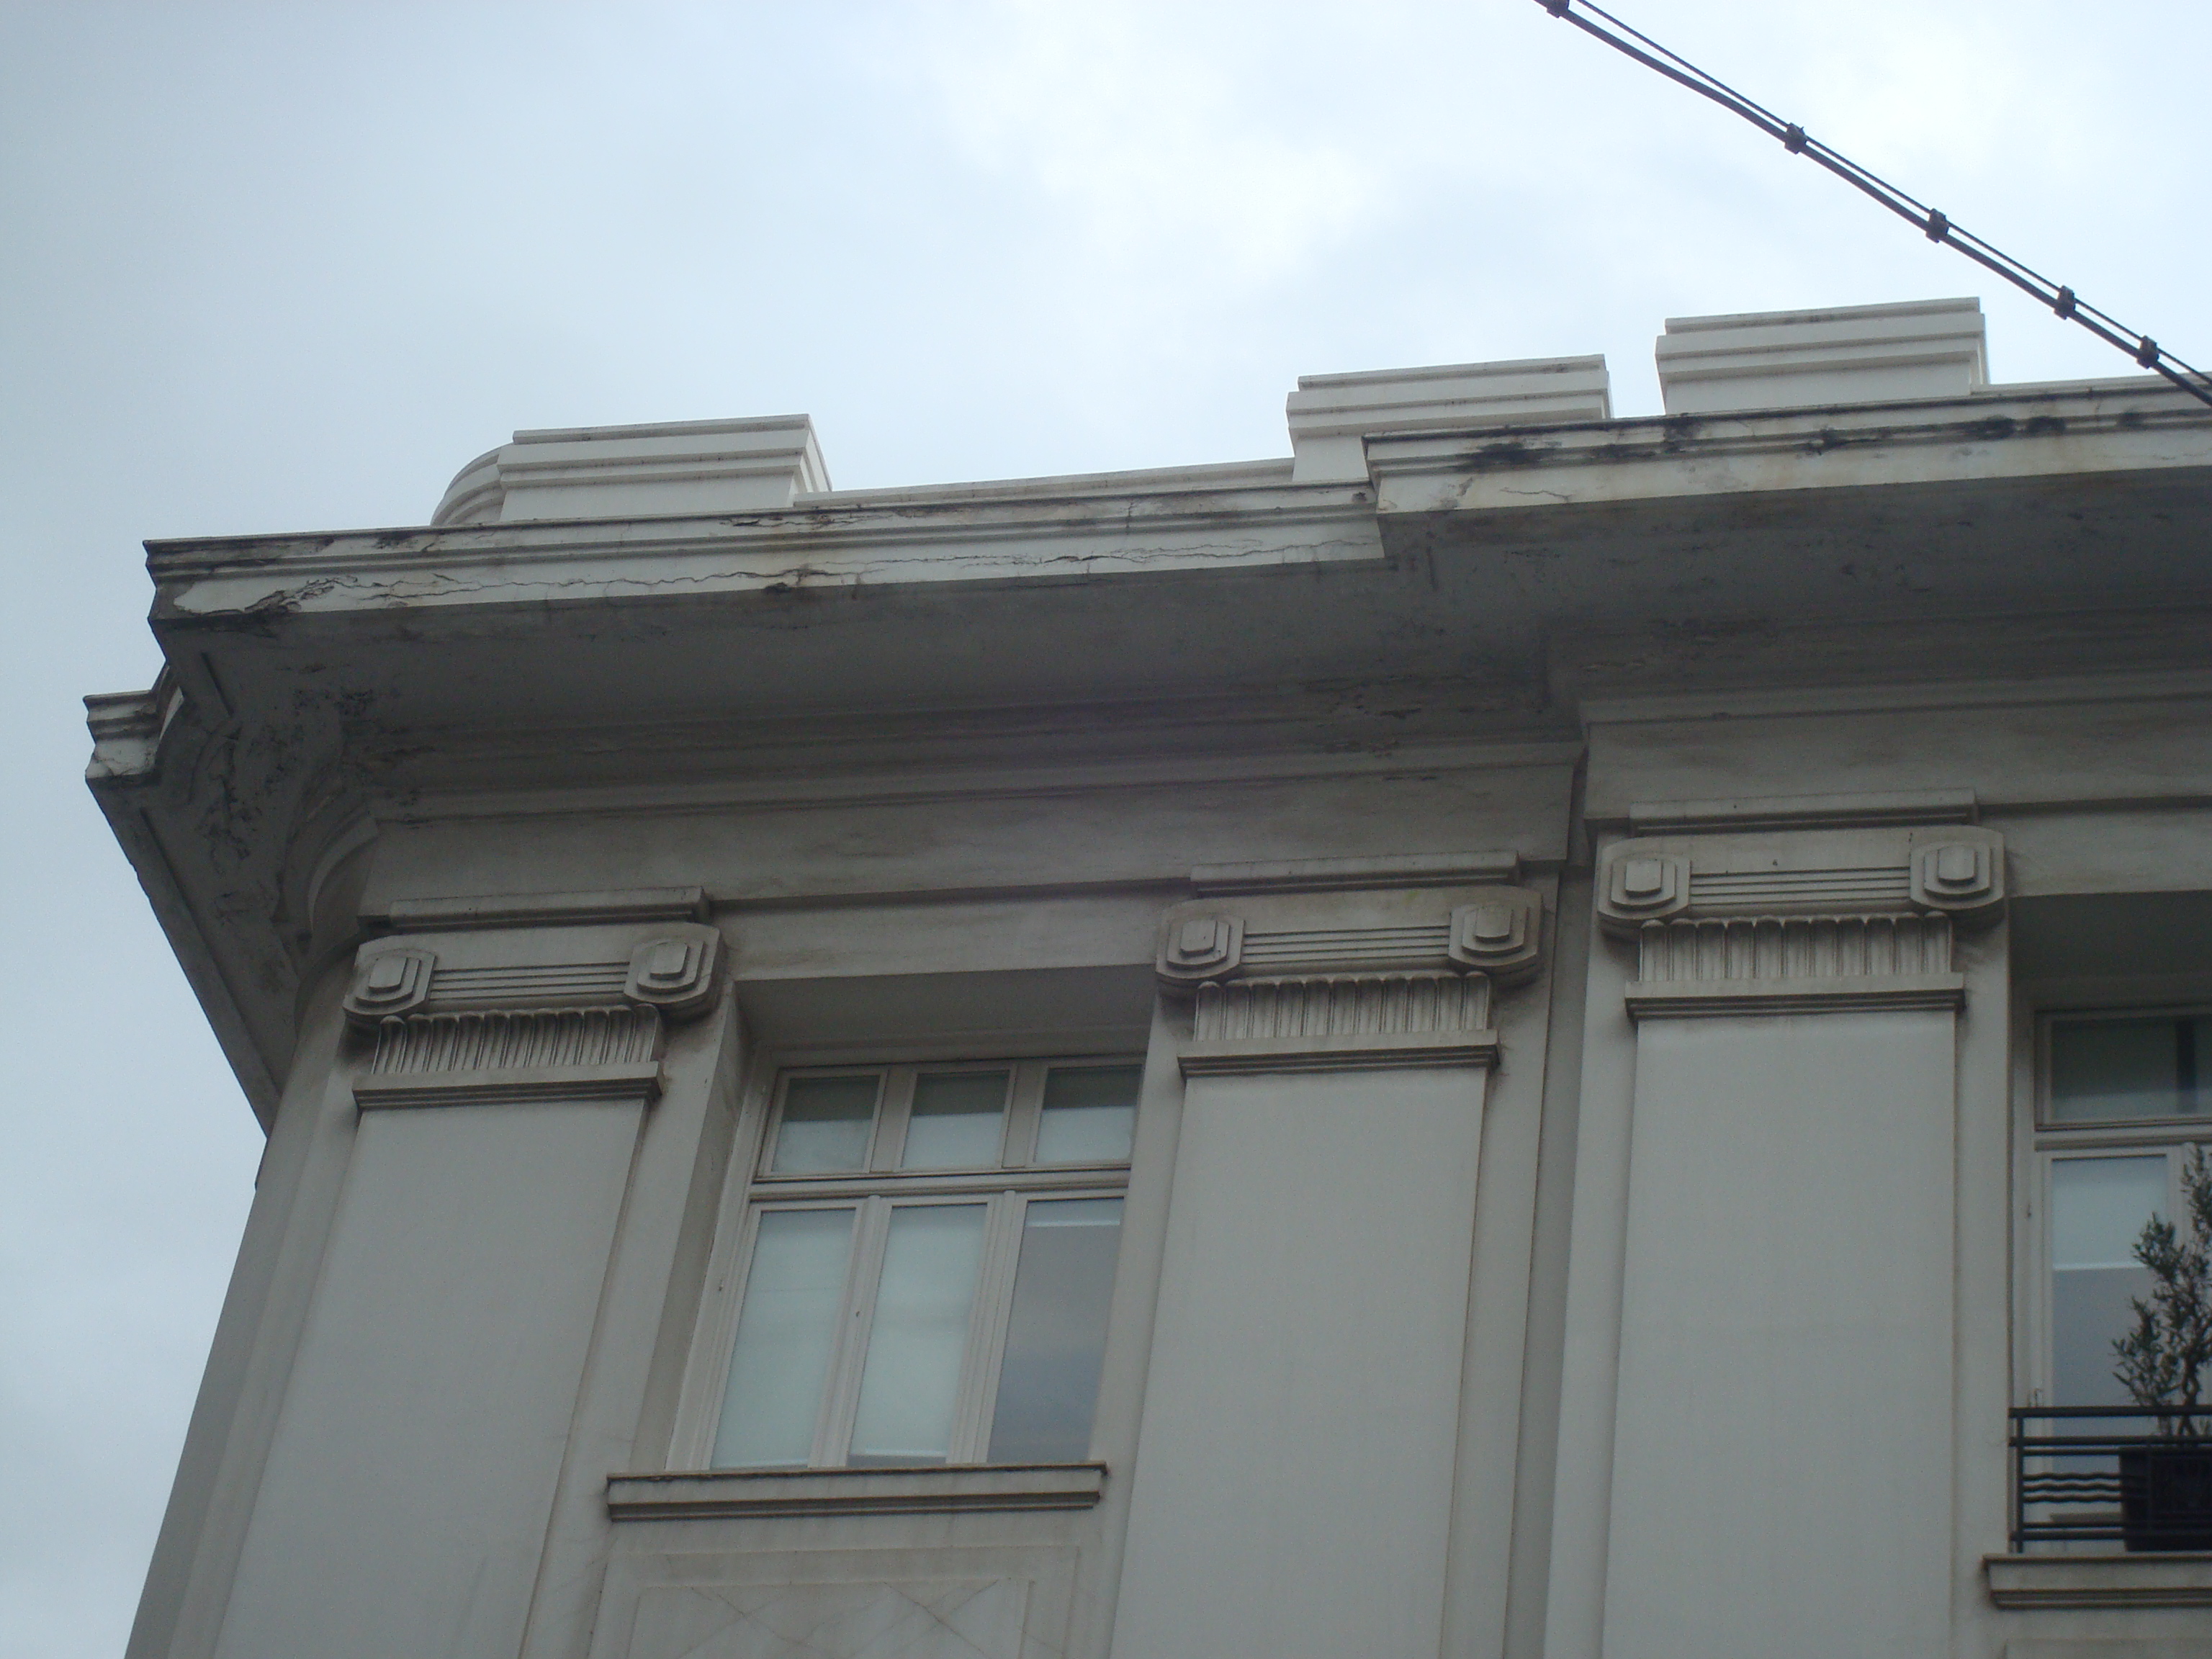 Detail of the facade (2015)